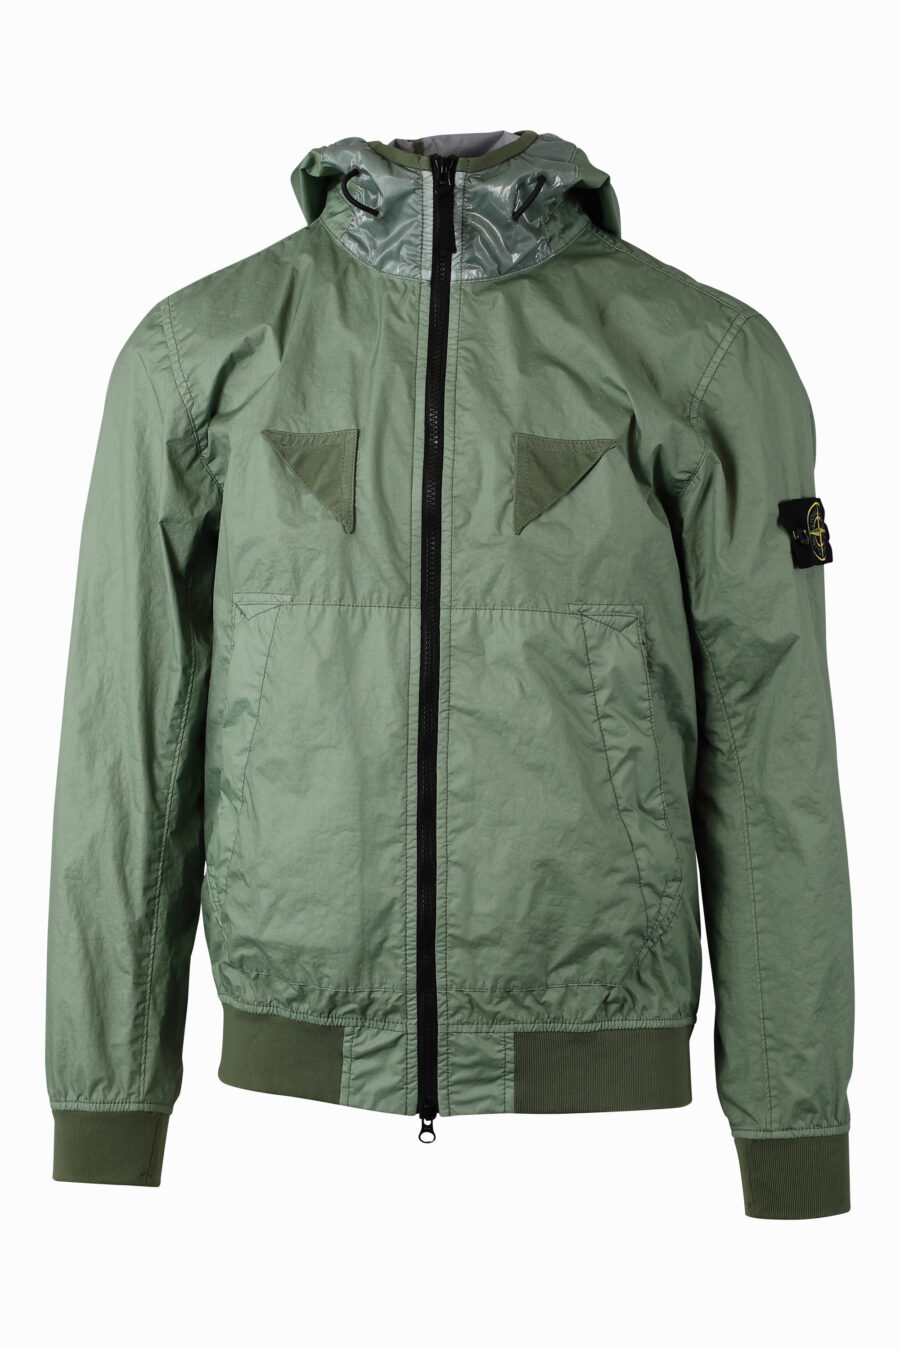 Grüne Jacke mit Kapuze und Logoaufnäher - IMG 1070